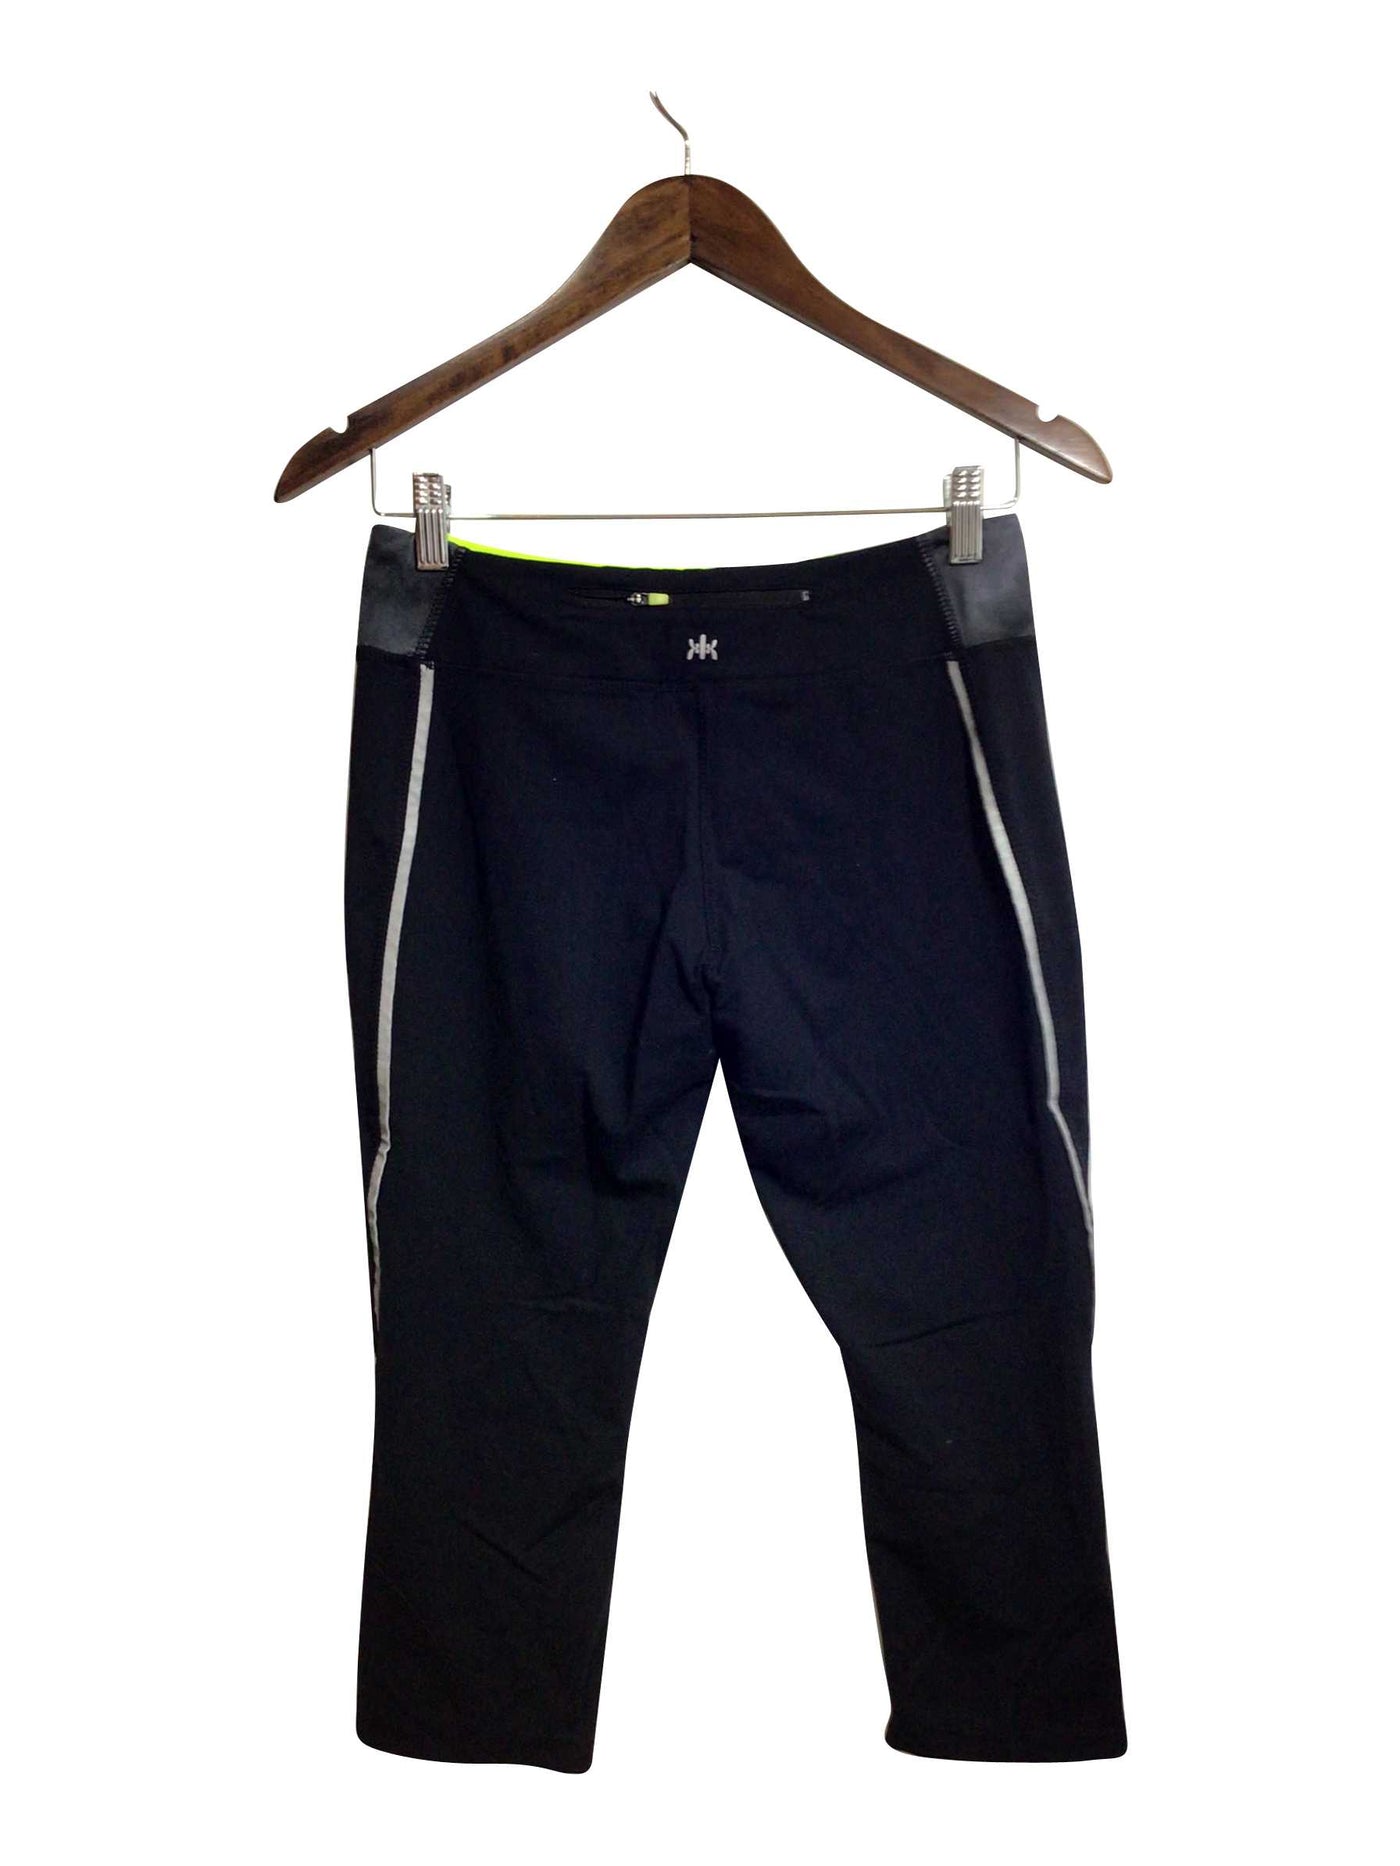 KYODAN Regular fit Activewear Legging in Black - Size M | 5.39 $ KOOP